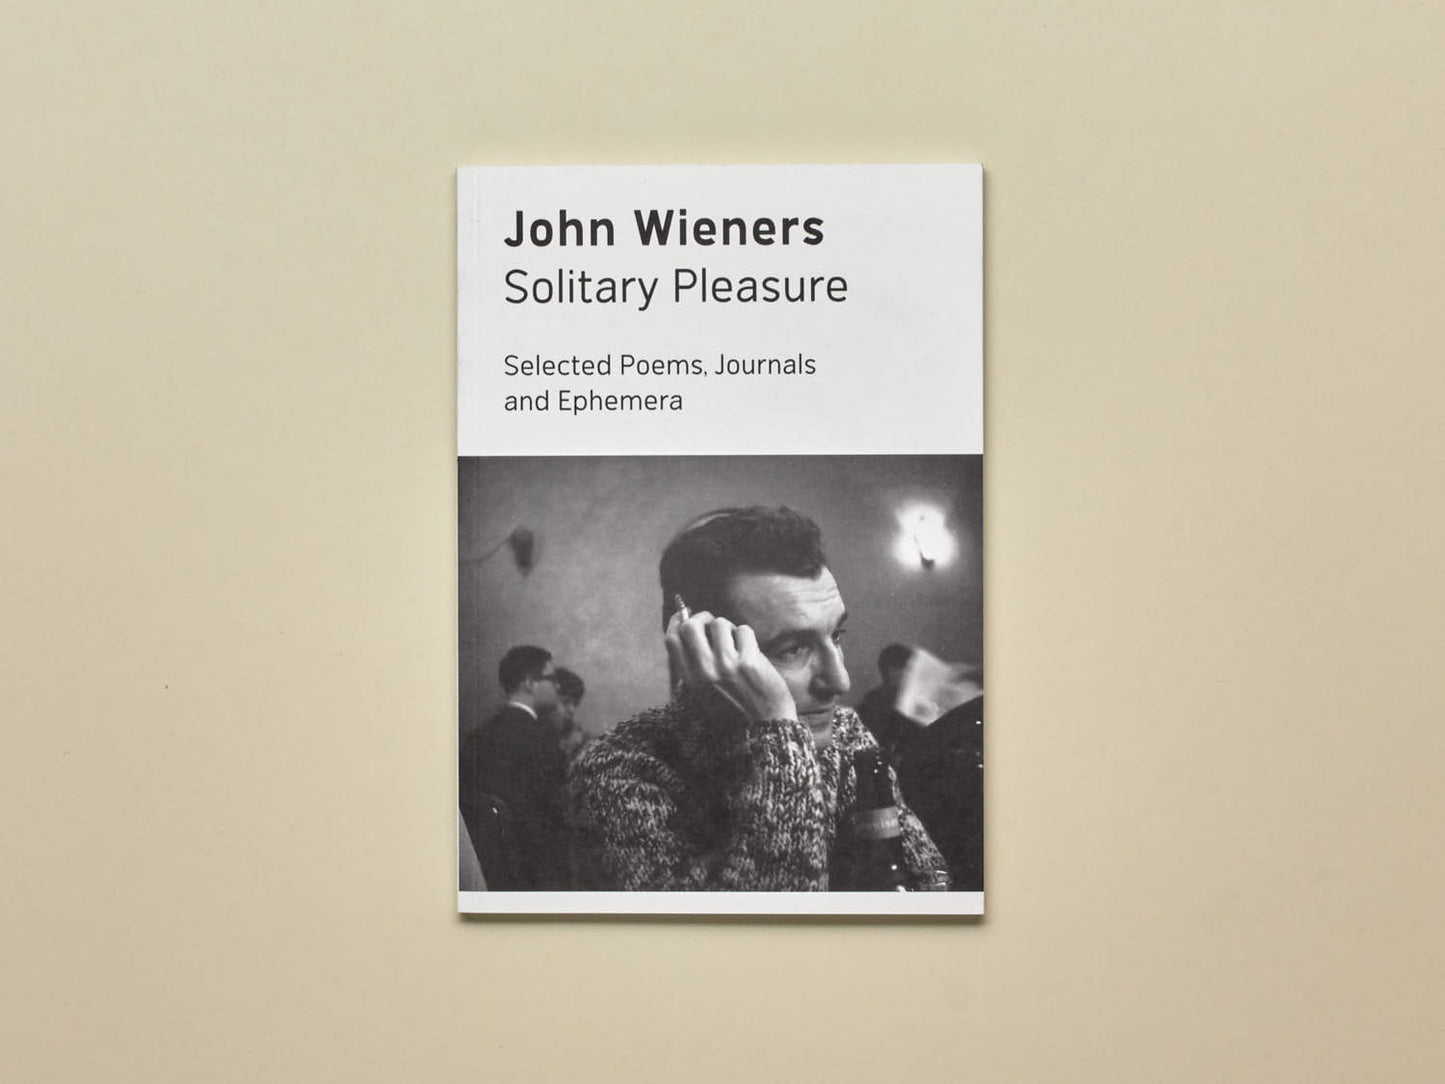 Solitary Pleasure: Selected Poems, Journals and Ephemera of John Wieners